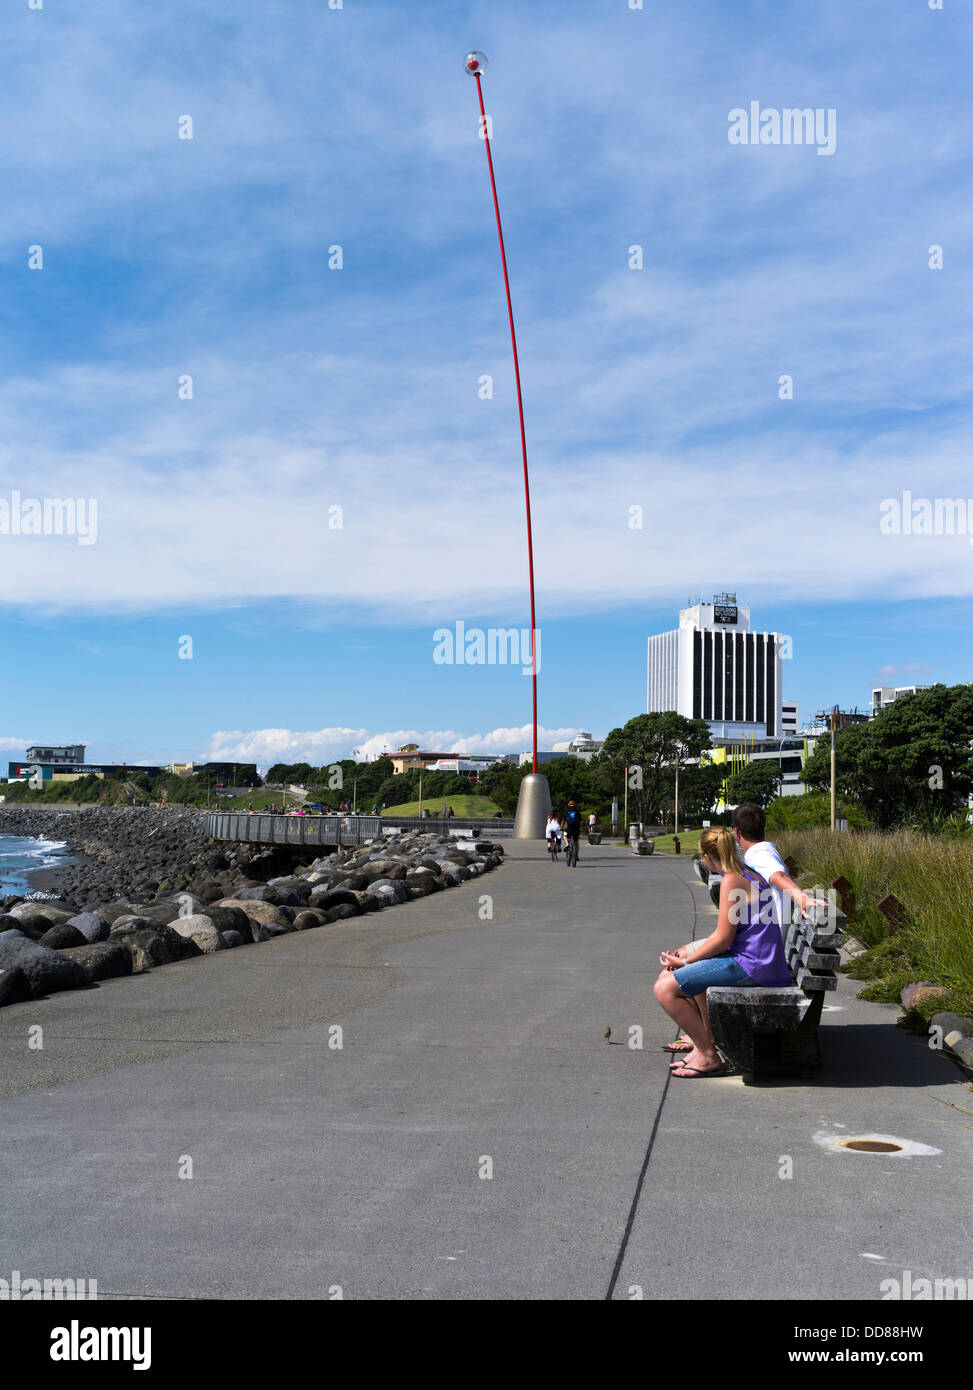 dh New Plymouth TARANAKI NEW ZEALAND Wind wand 48 metre kinetic sculpture seafront promenade couple bench Stock Photo